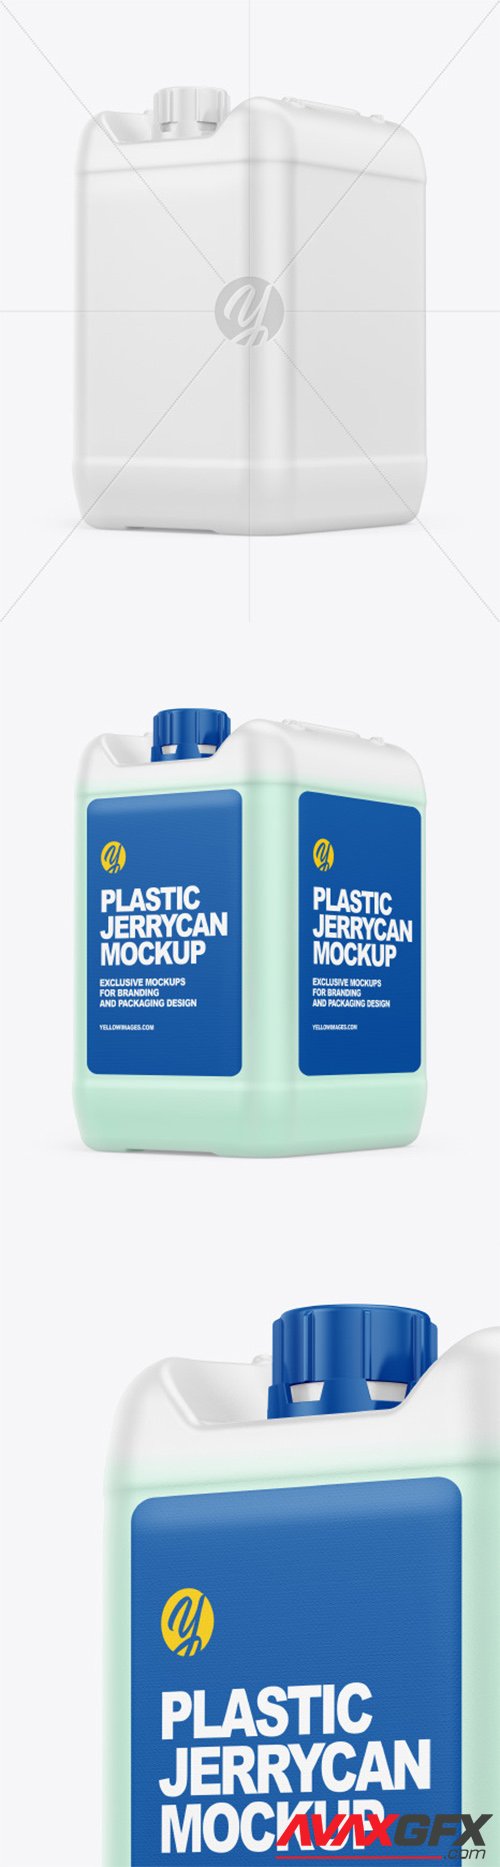 Plastic Jerrycan with Liquid Mockup 66512